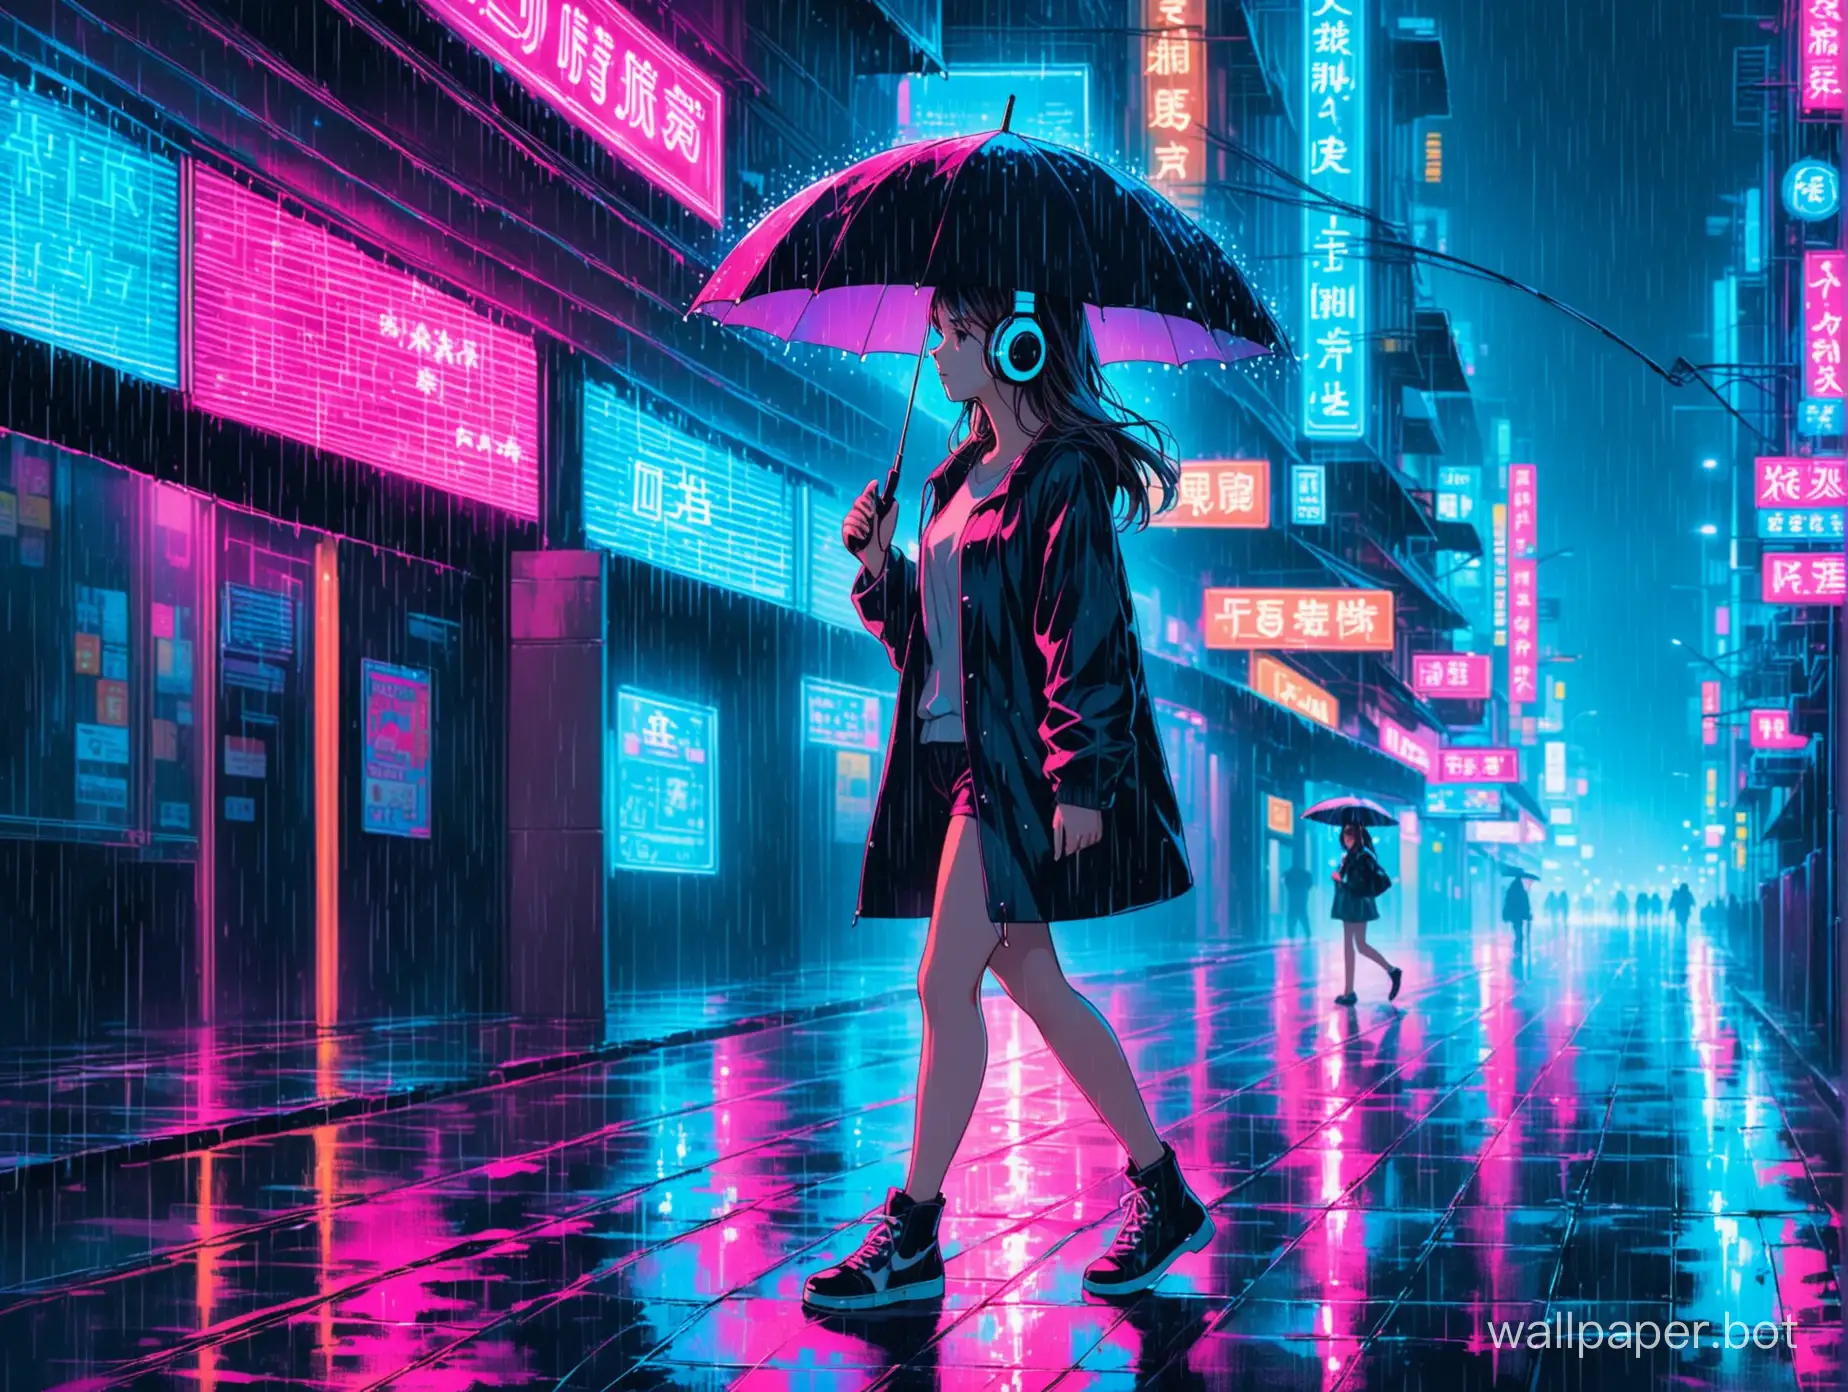 Girl-Walking-in-Rainy-Night-City-with-Headphones-and-Umbrella-under-Blue-Neon-Lights